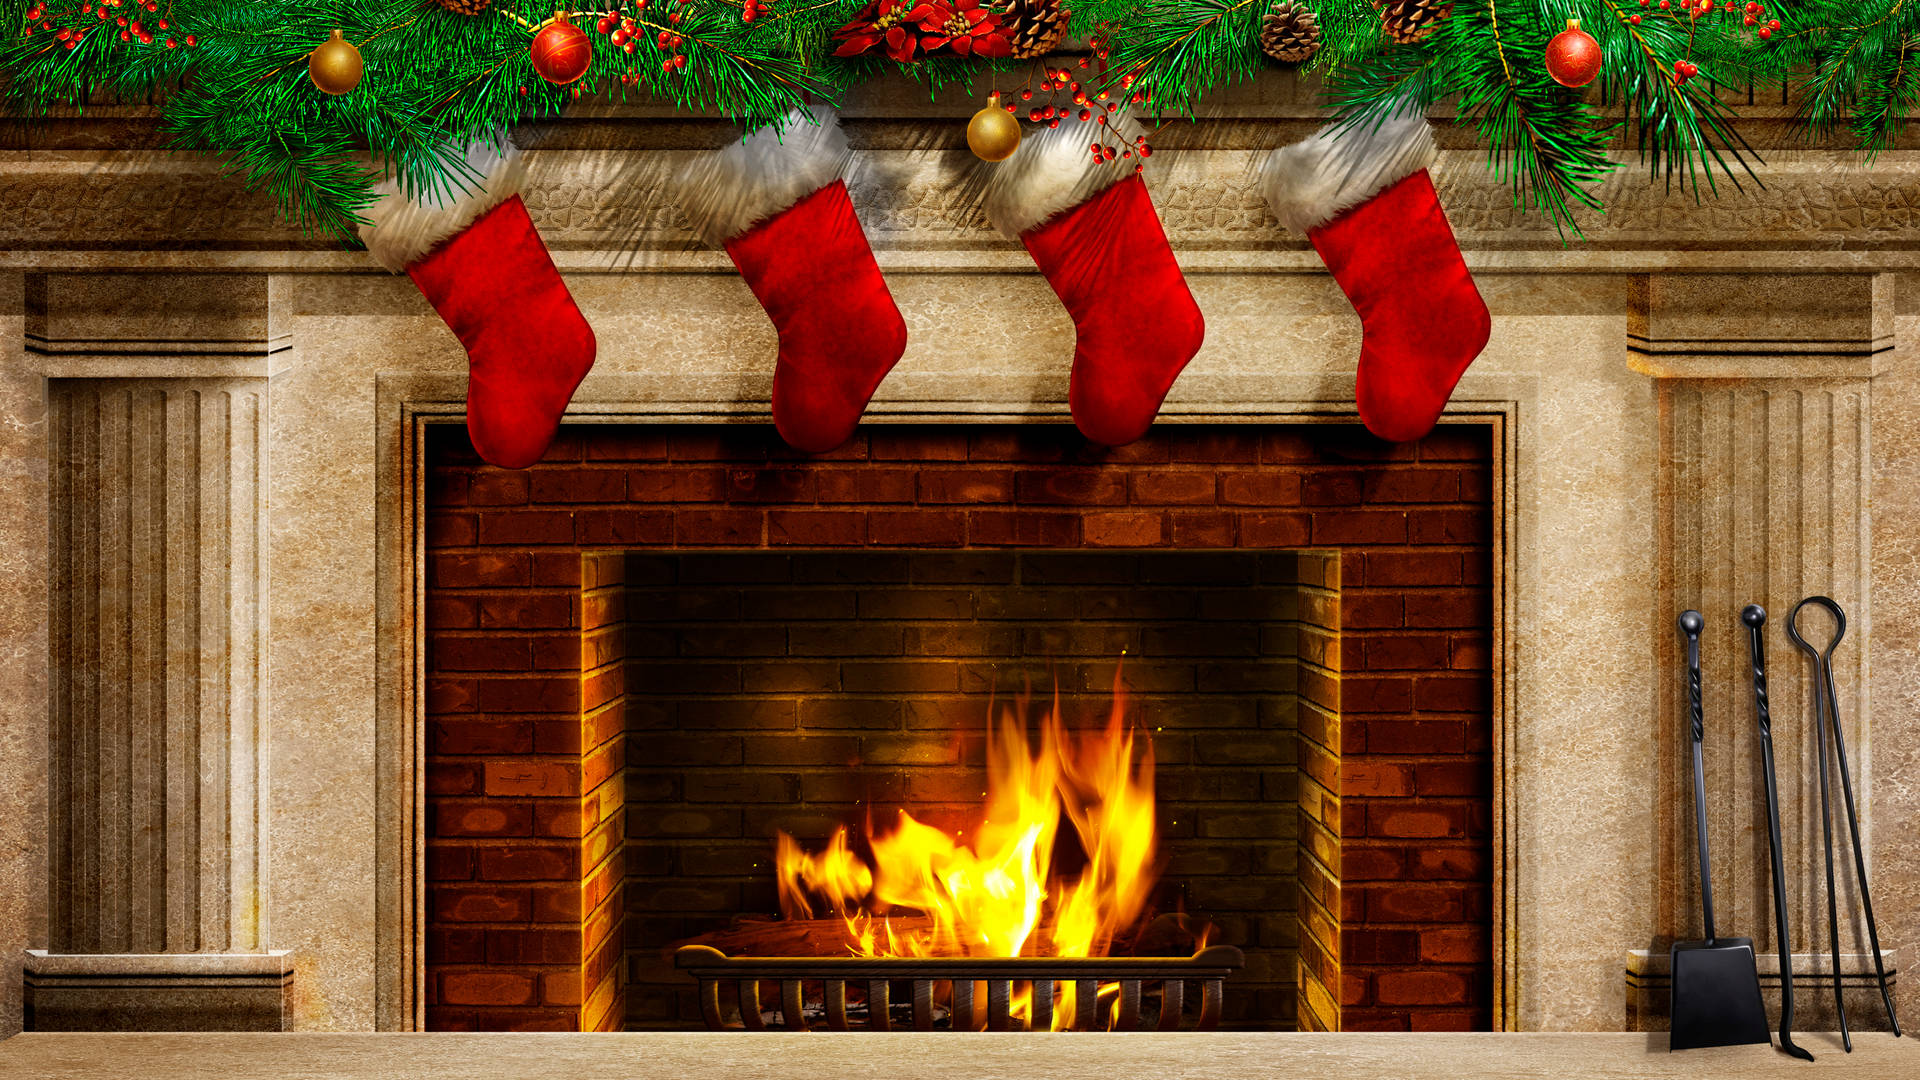 Fireplace With Beautiful Christmas Stockings Wallpaper